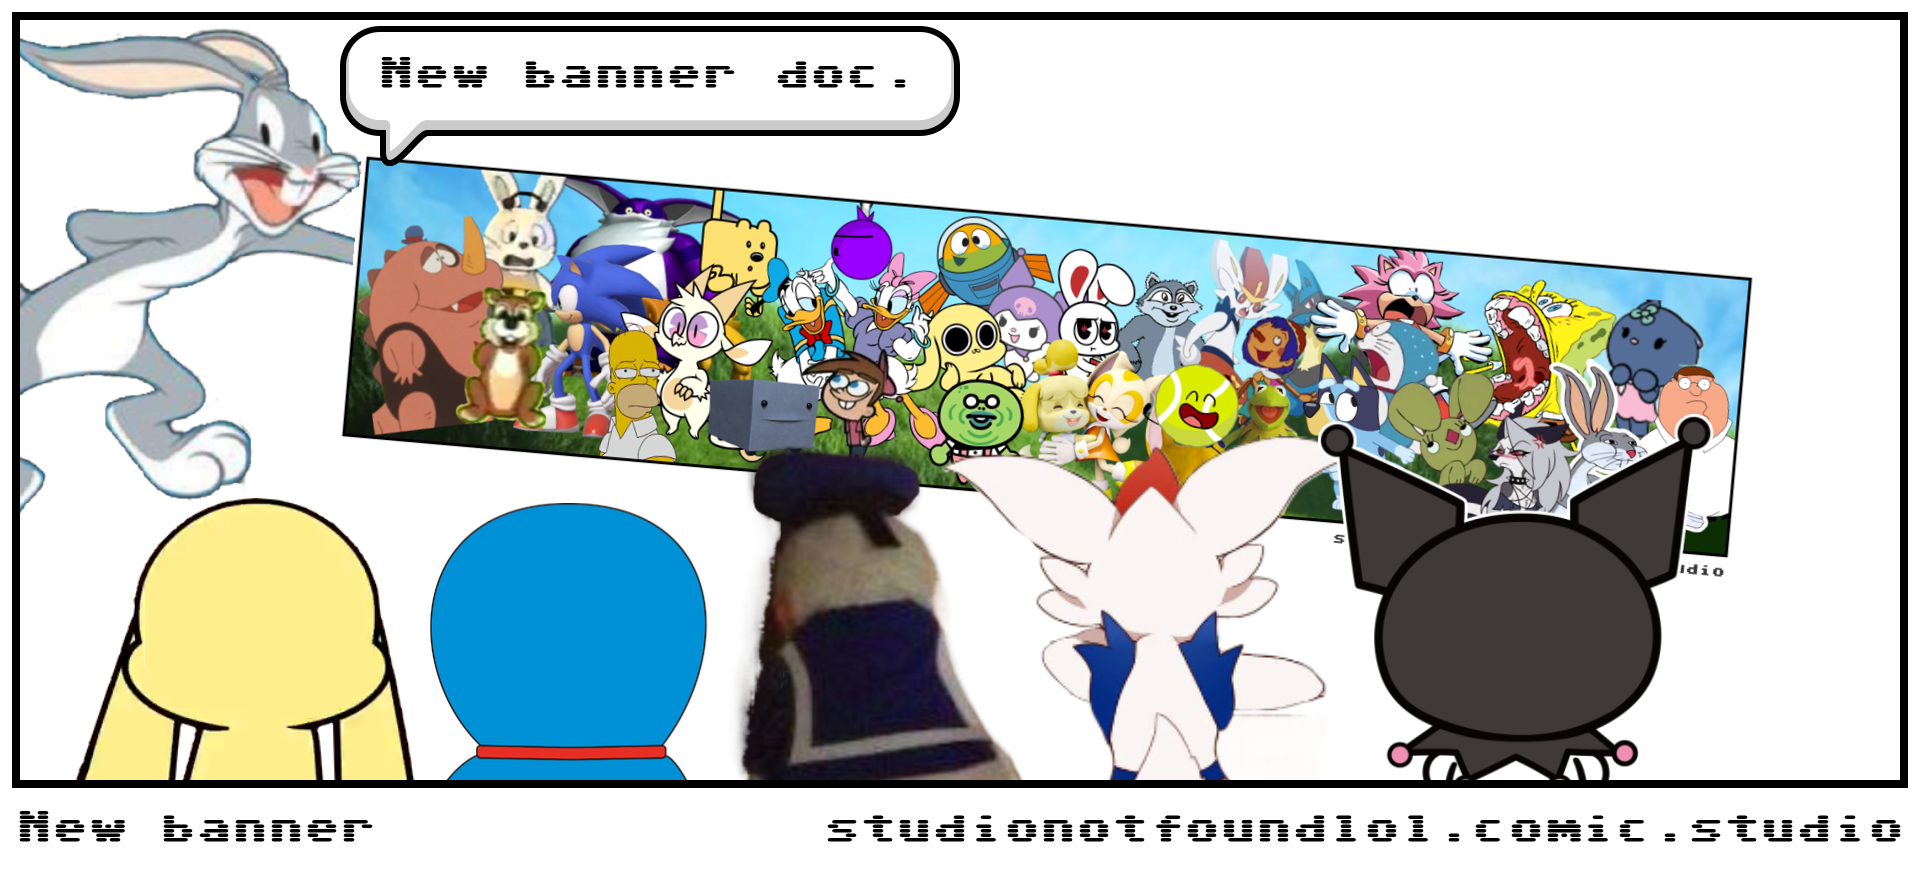 New banner